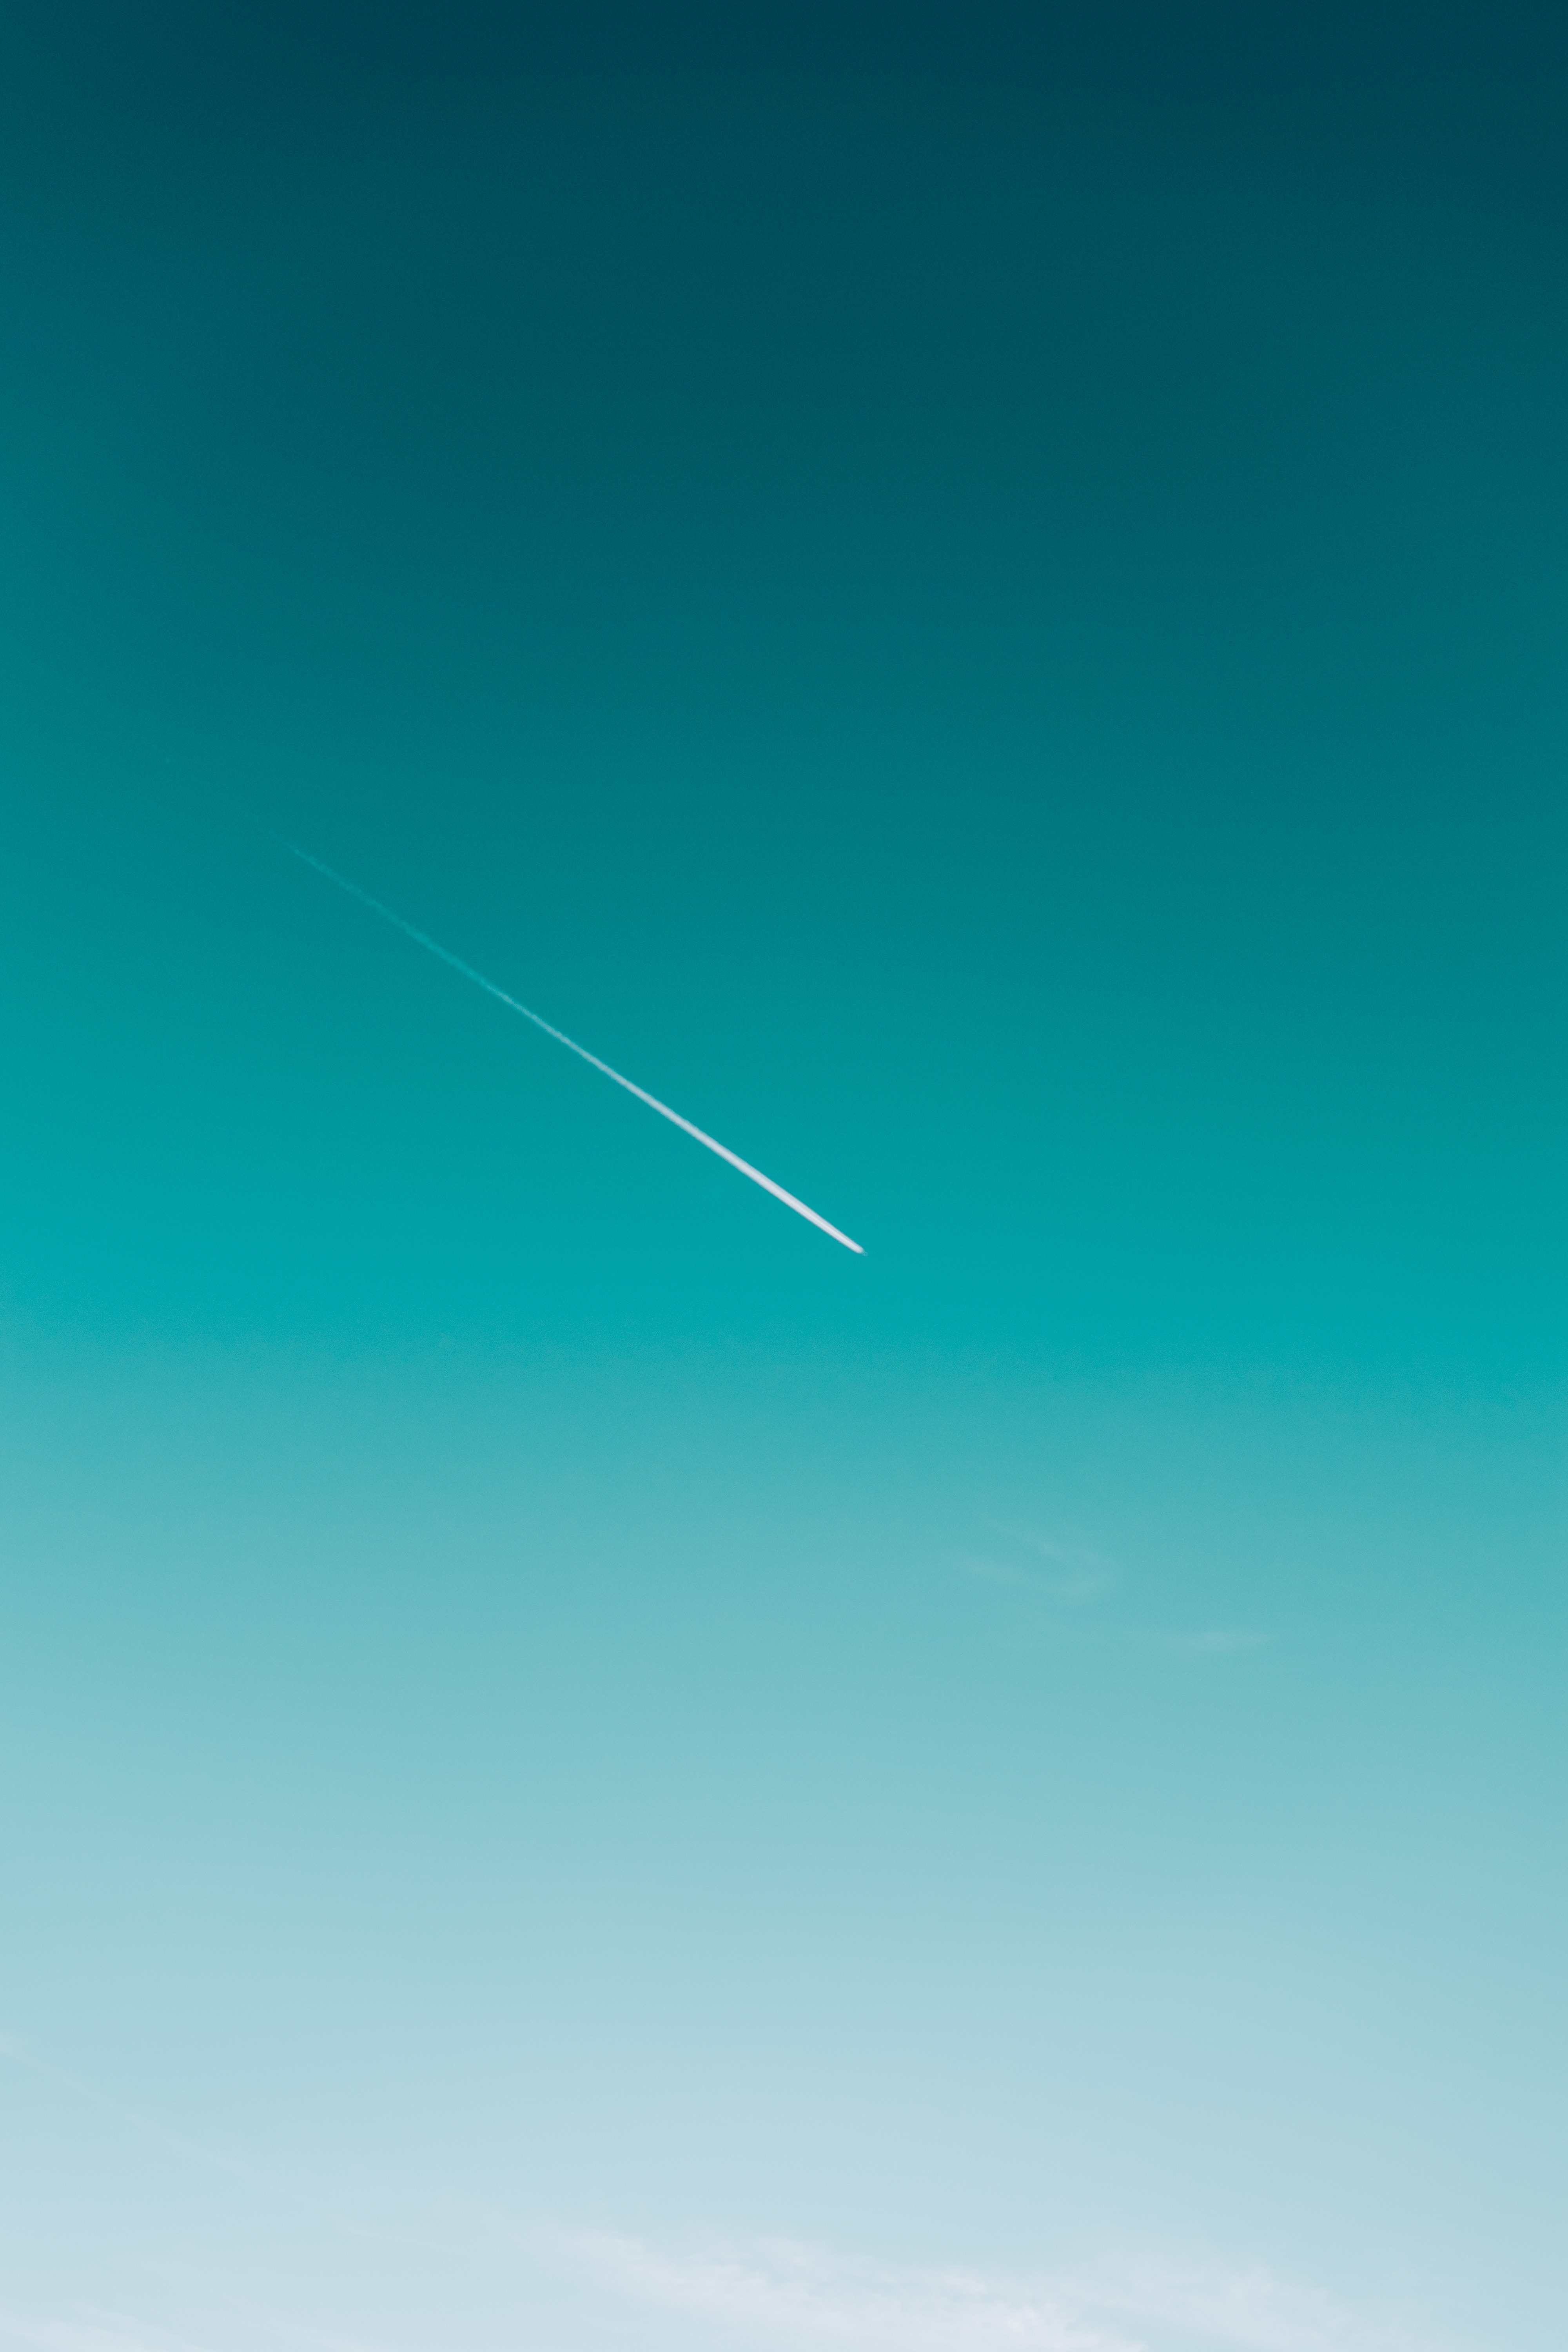 minimalism, plane, track, sky, airplane, trace